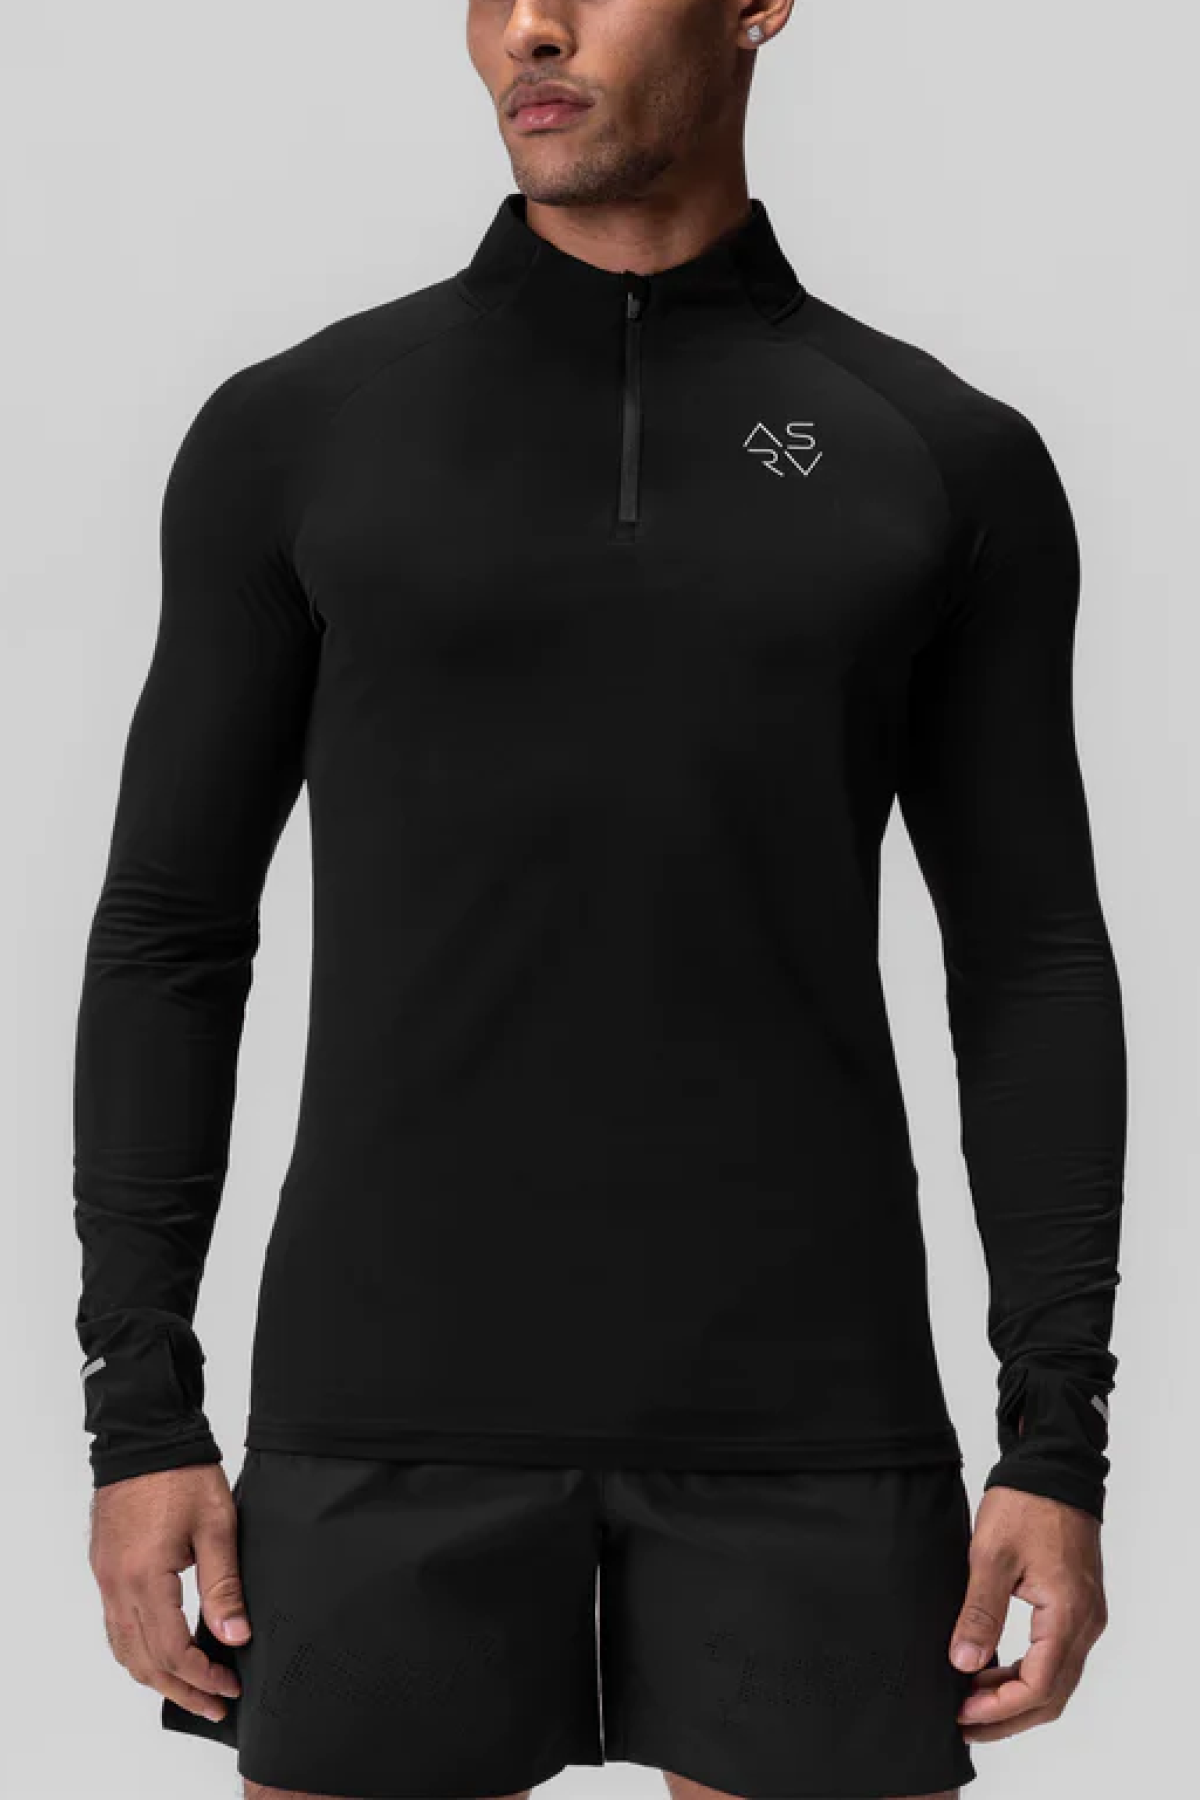 ASRV Thermal Training Quarter Zip Sweater - Black